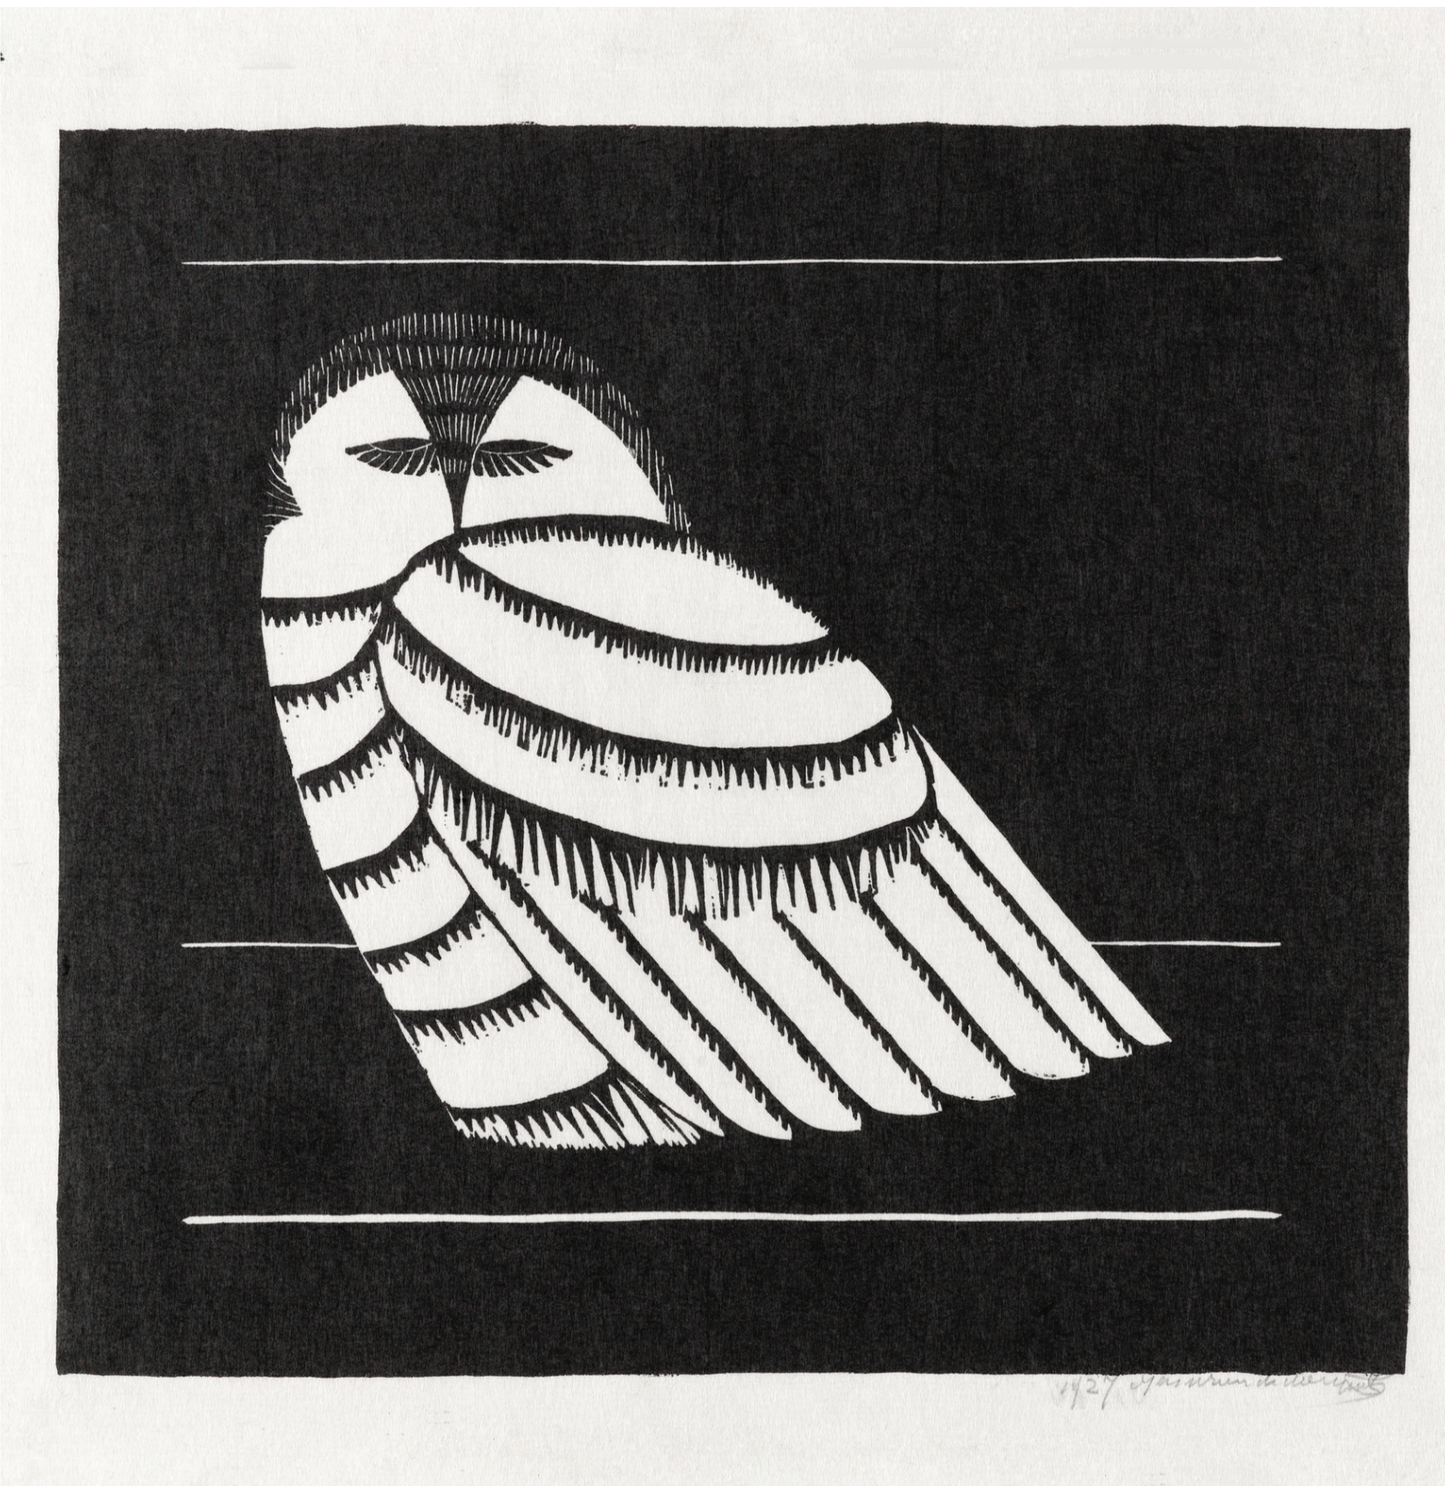 Snowy Owl (1927) by Samuel Jessurun de Mesquita, 1927 - Square Greeting Card